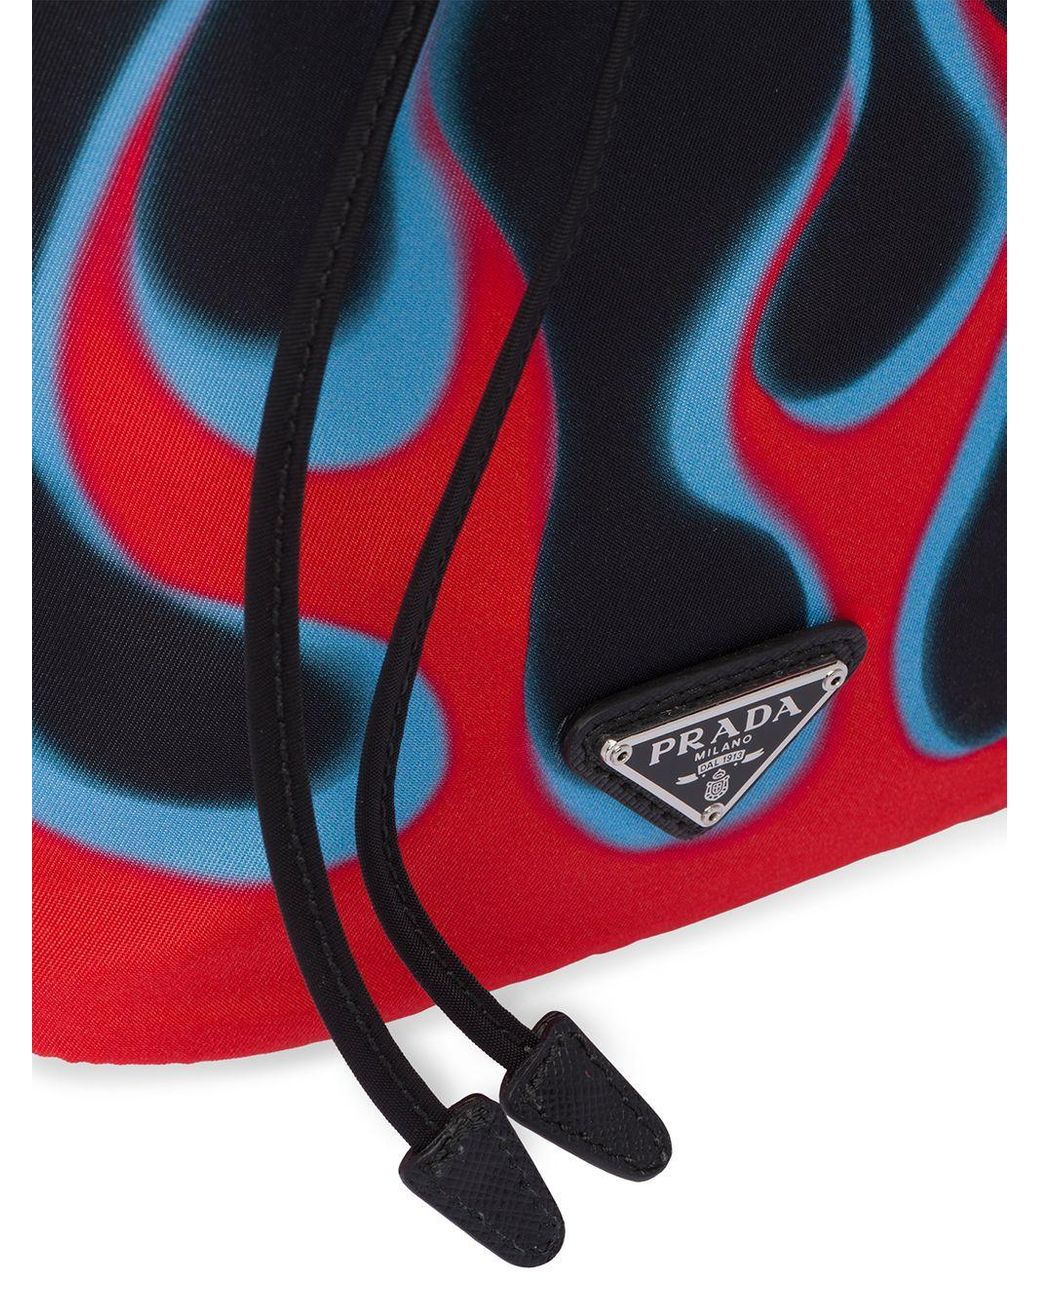 Prada Flames Print Drawstring Travel Bag in Black | Lyst